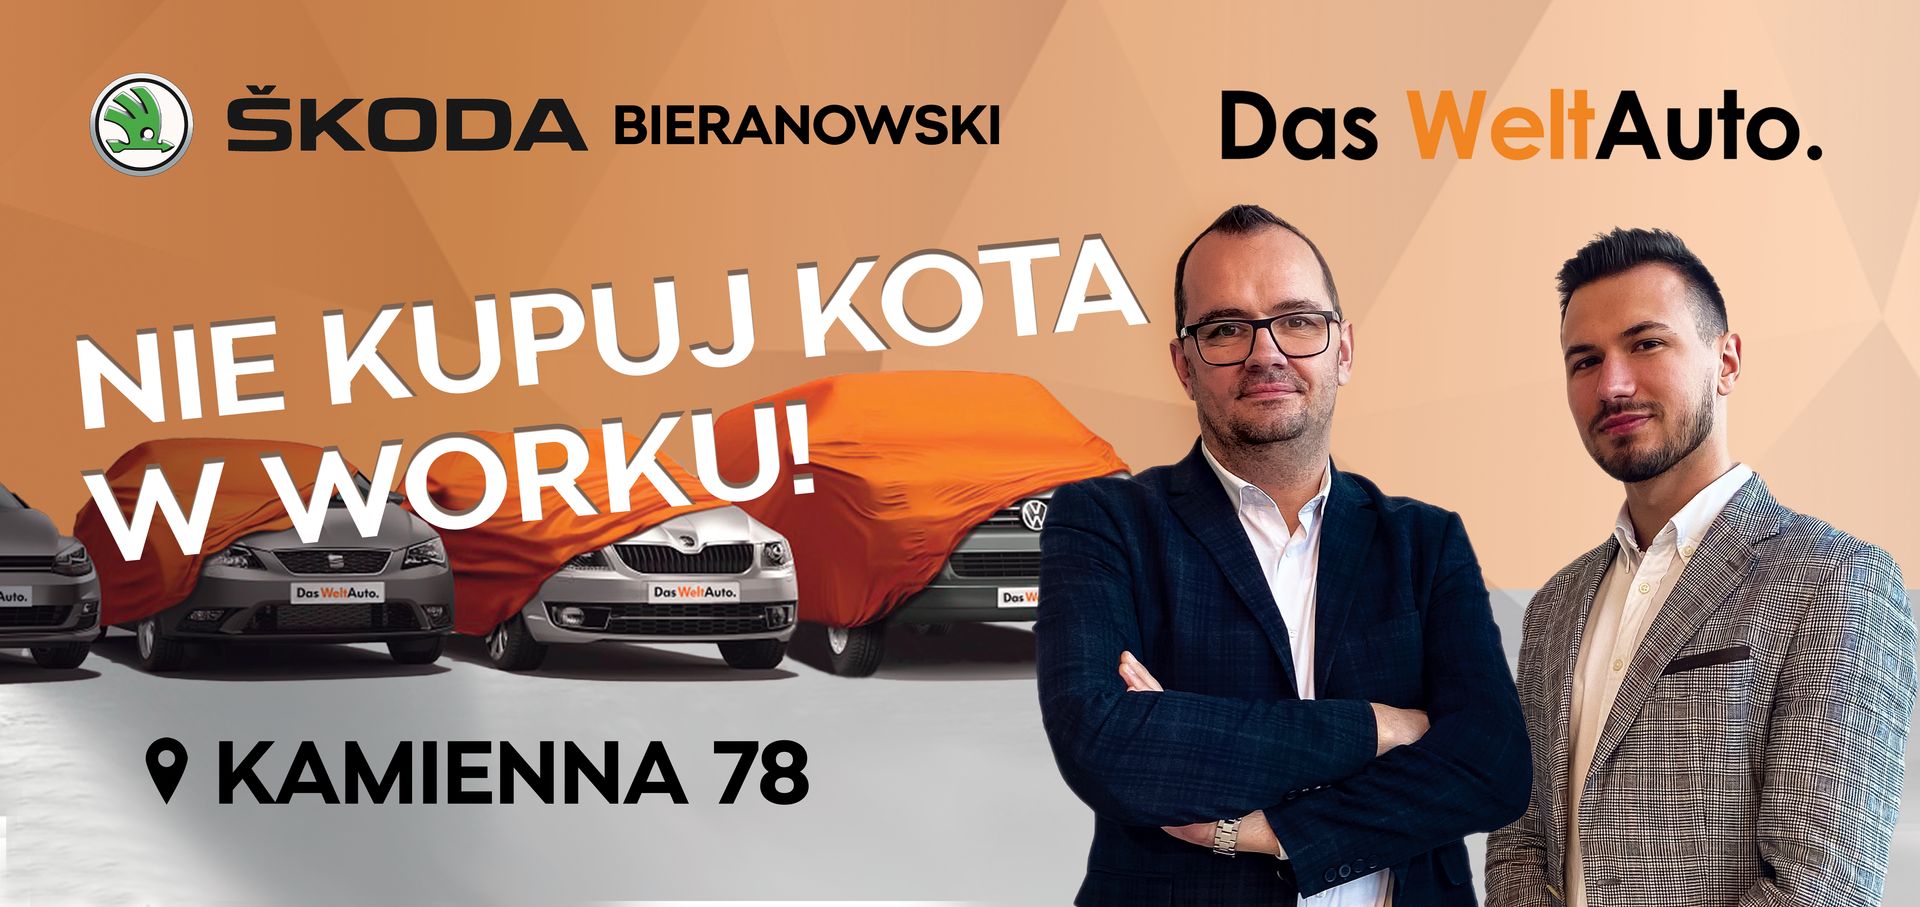 Bieranowski Sp. z o.o. top banner